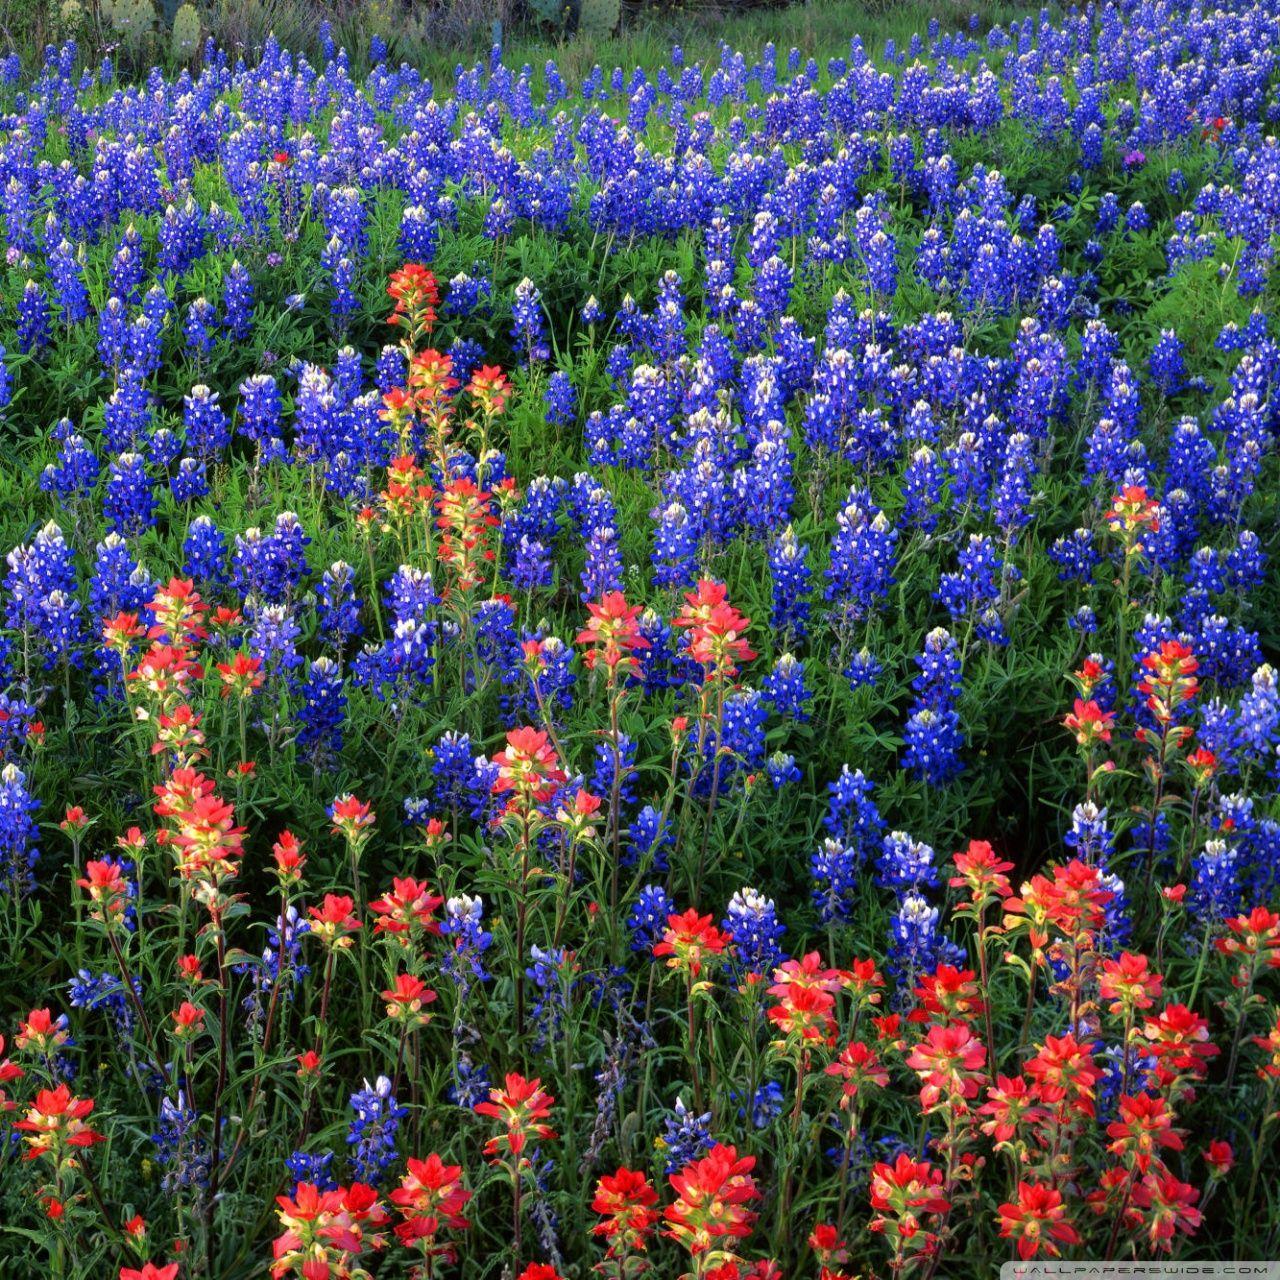 720 Bluebonnet Texas Vertical Flower Stock Photos Pictures  RoyaltyFree  Images  iStock